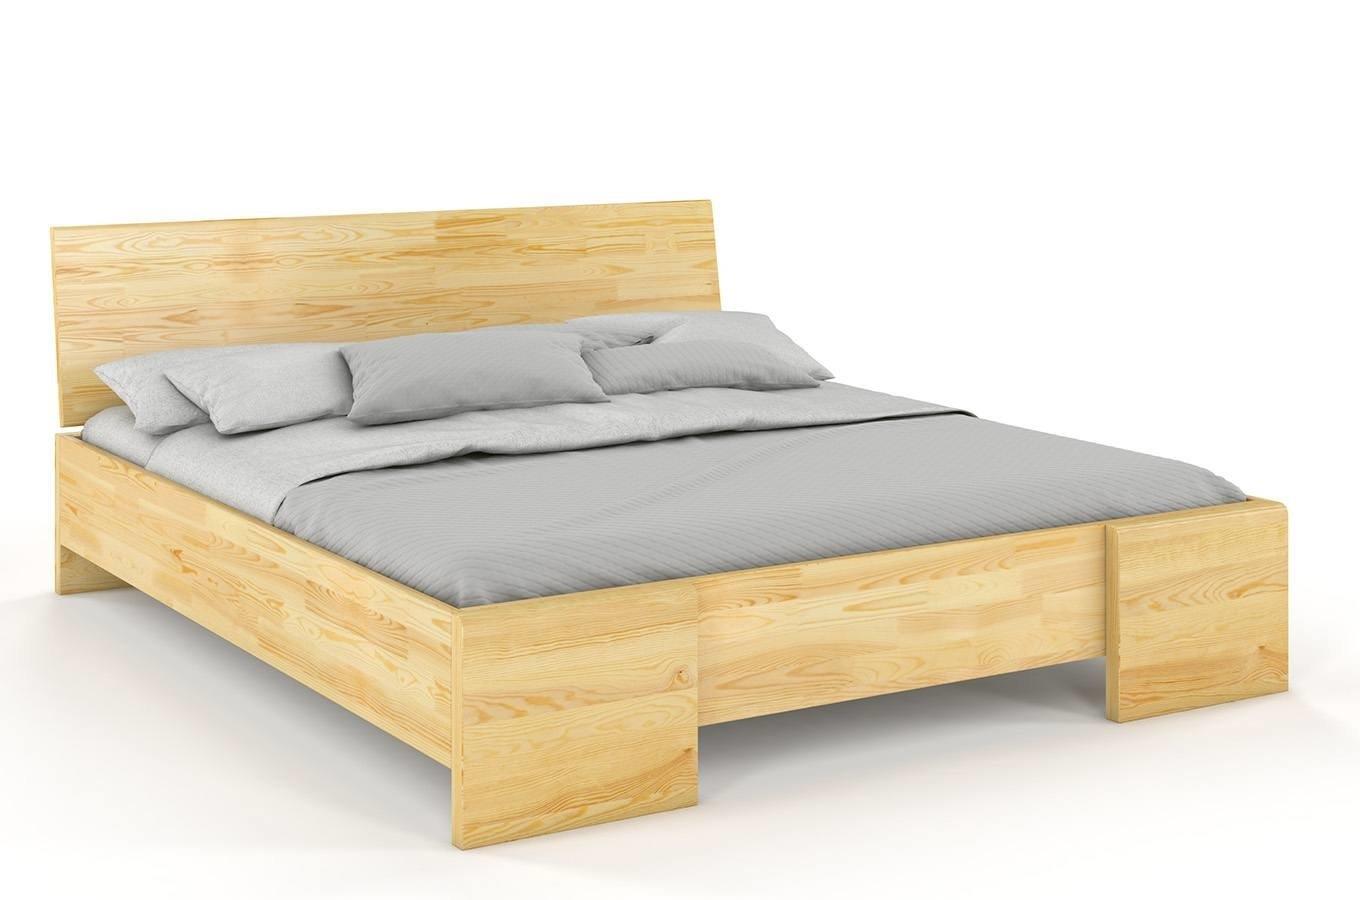 Łóżko drewniane sosnowe Visby Hessler High / 180x200 cm, kolor naturalny